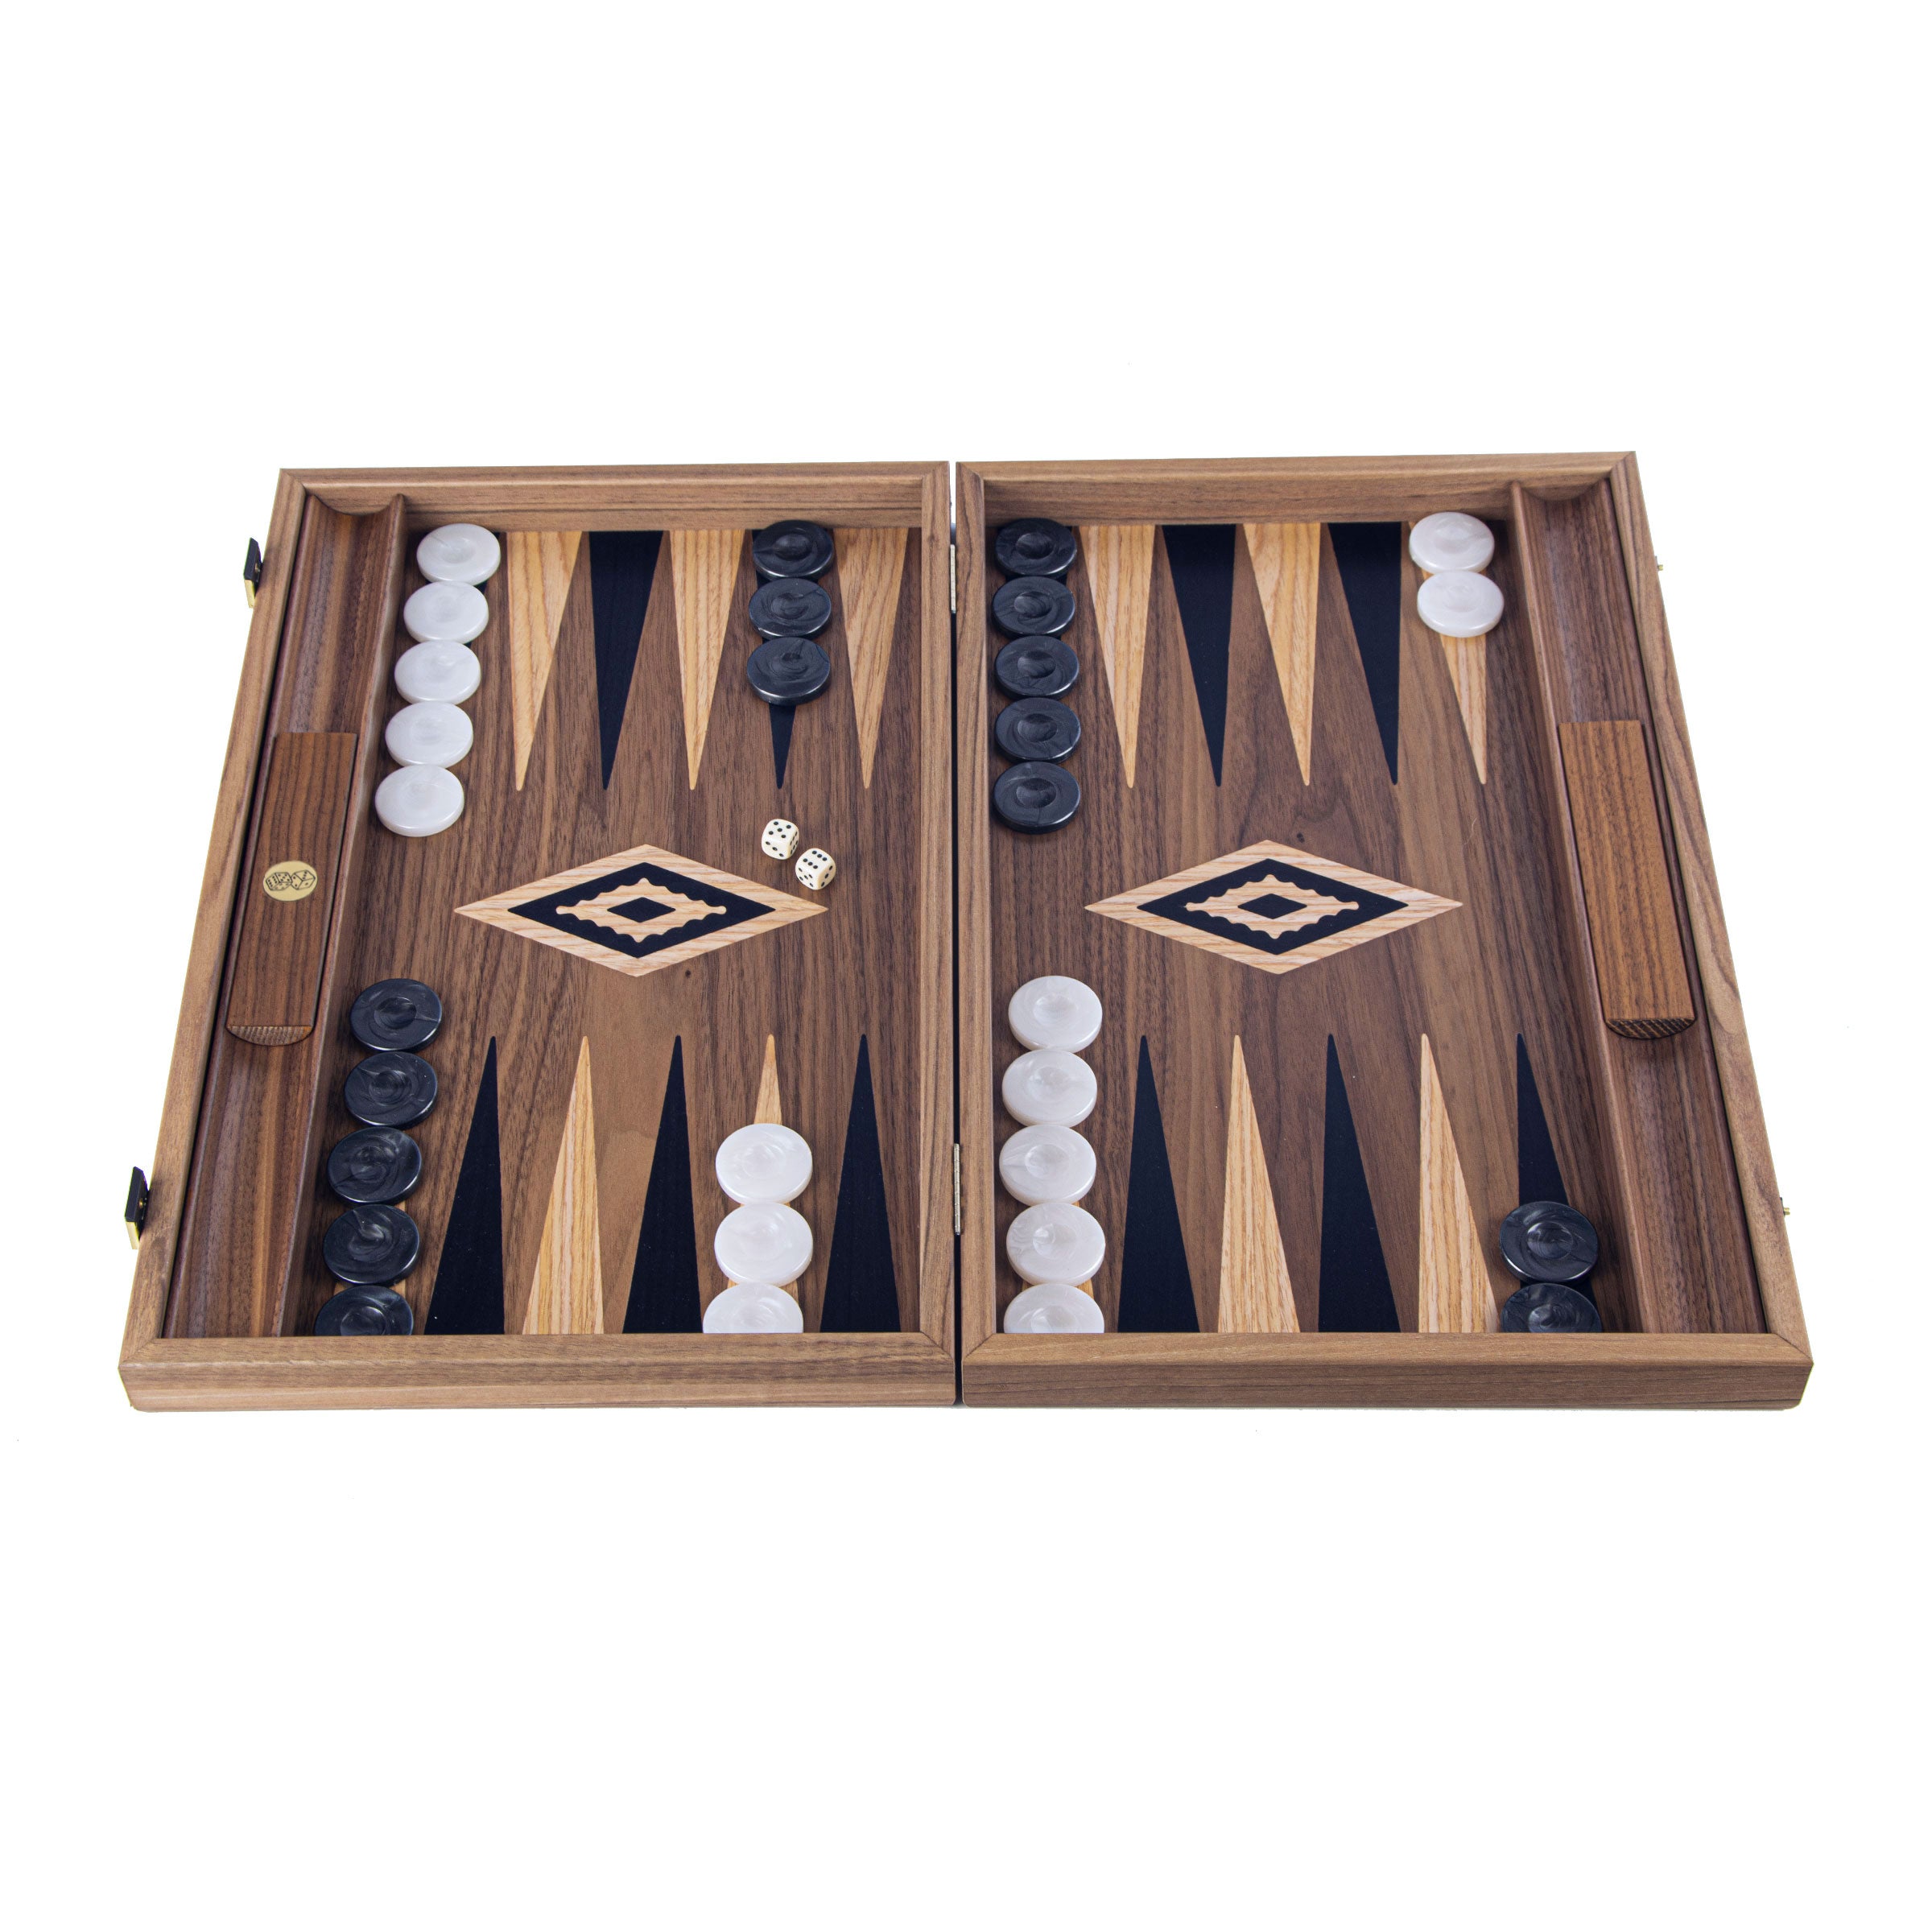 19" Wooden Backgammon Set